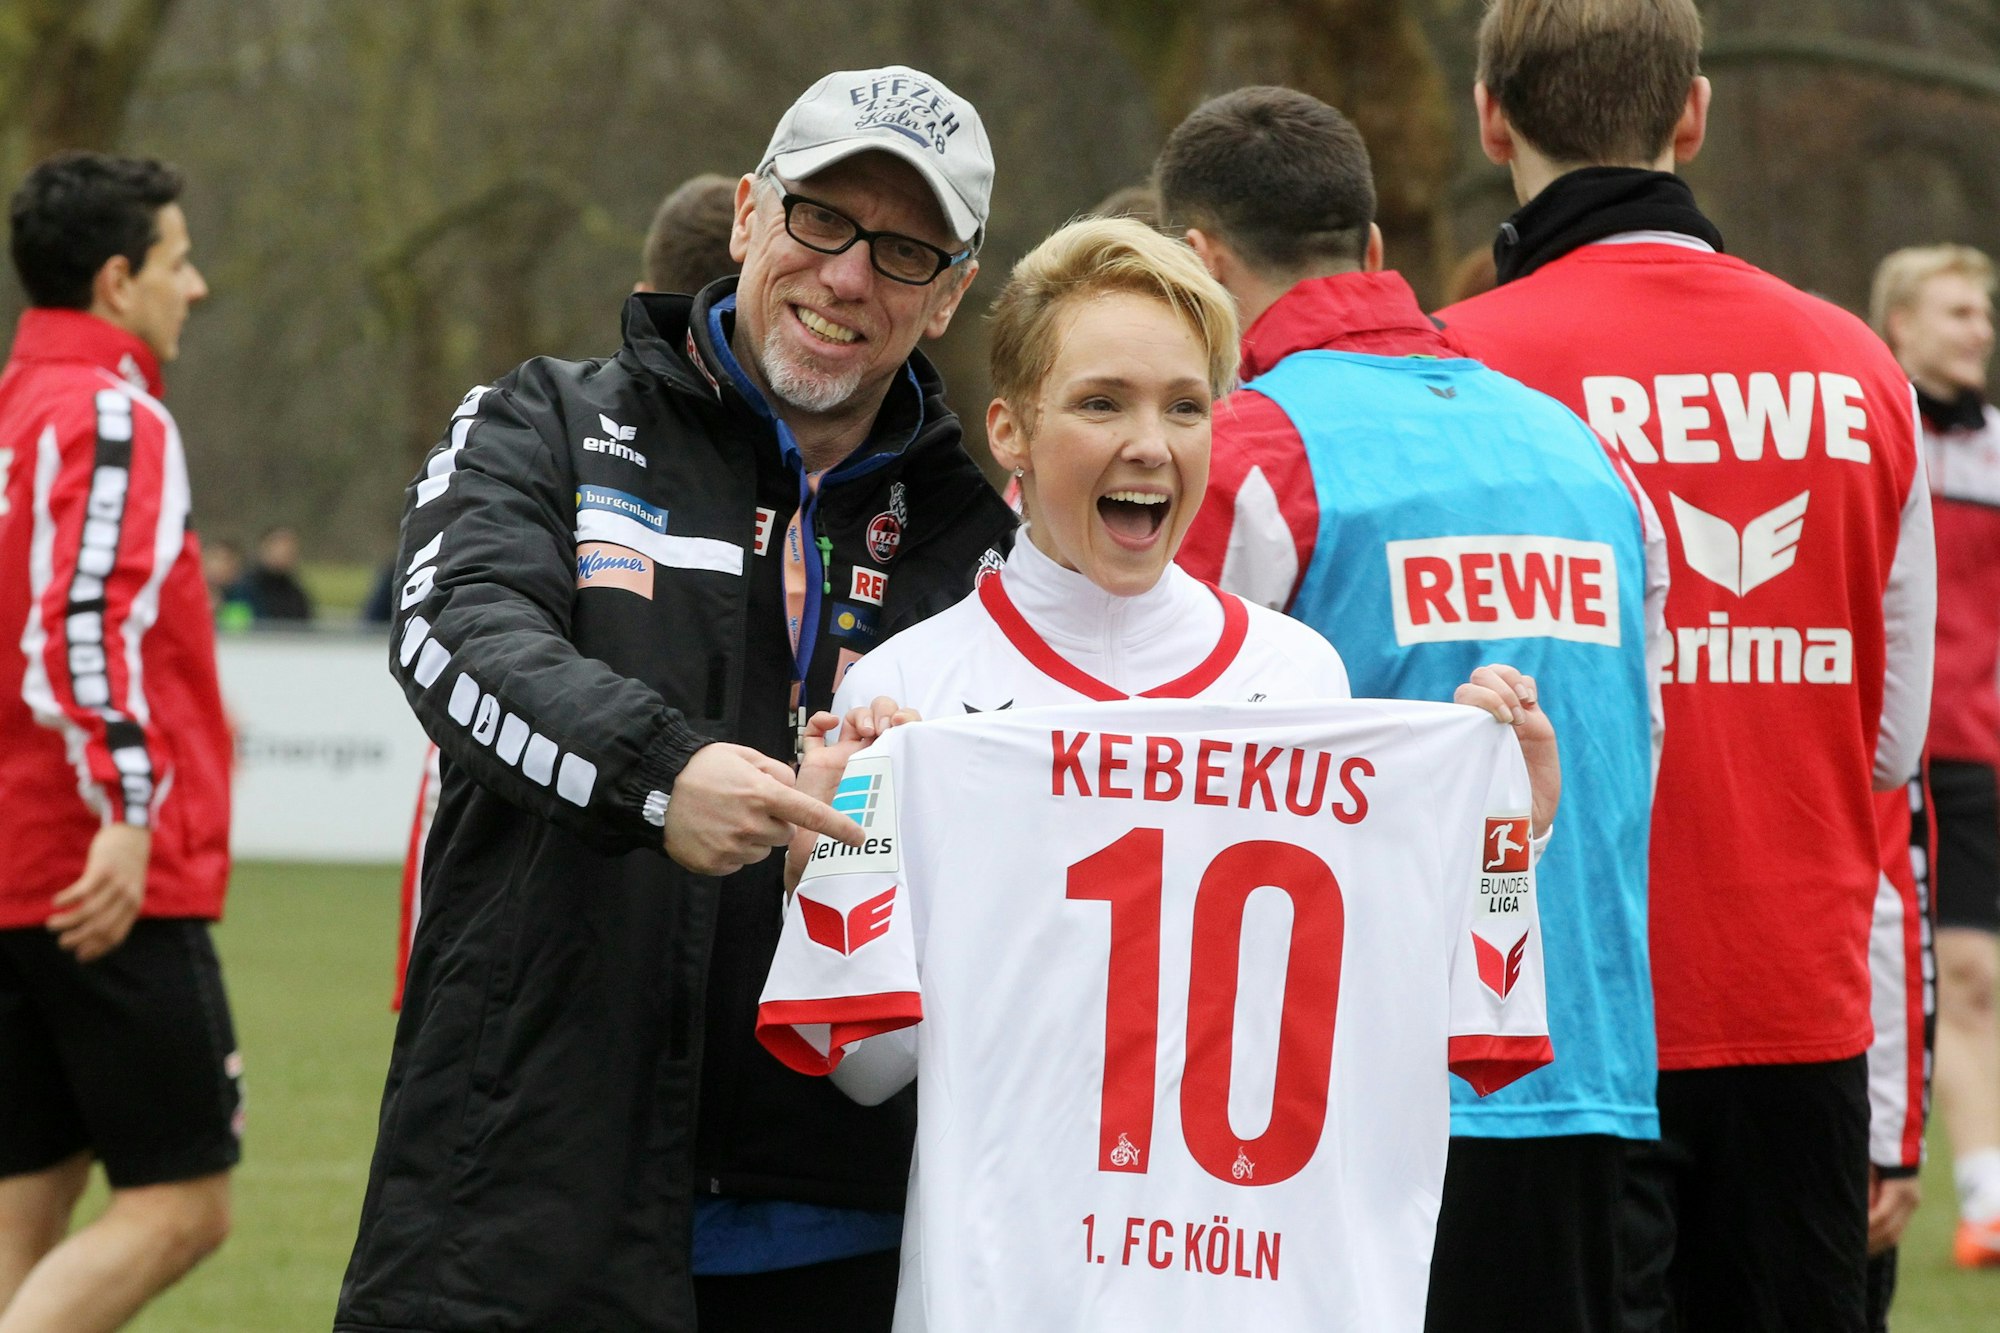 Kebekus beim 1. FC Köln 1